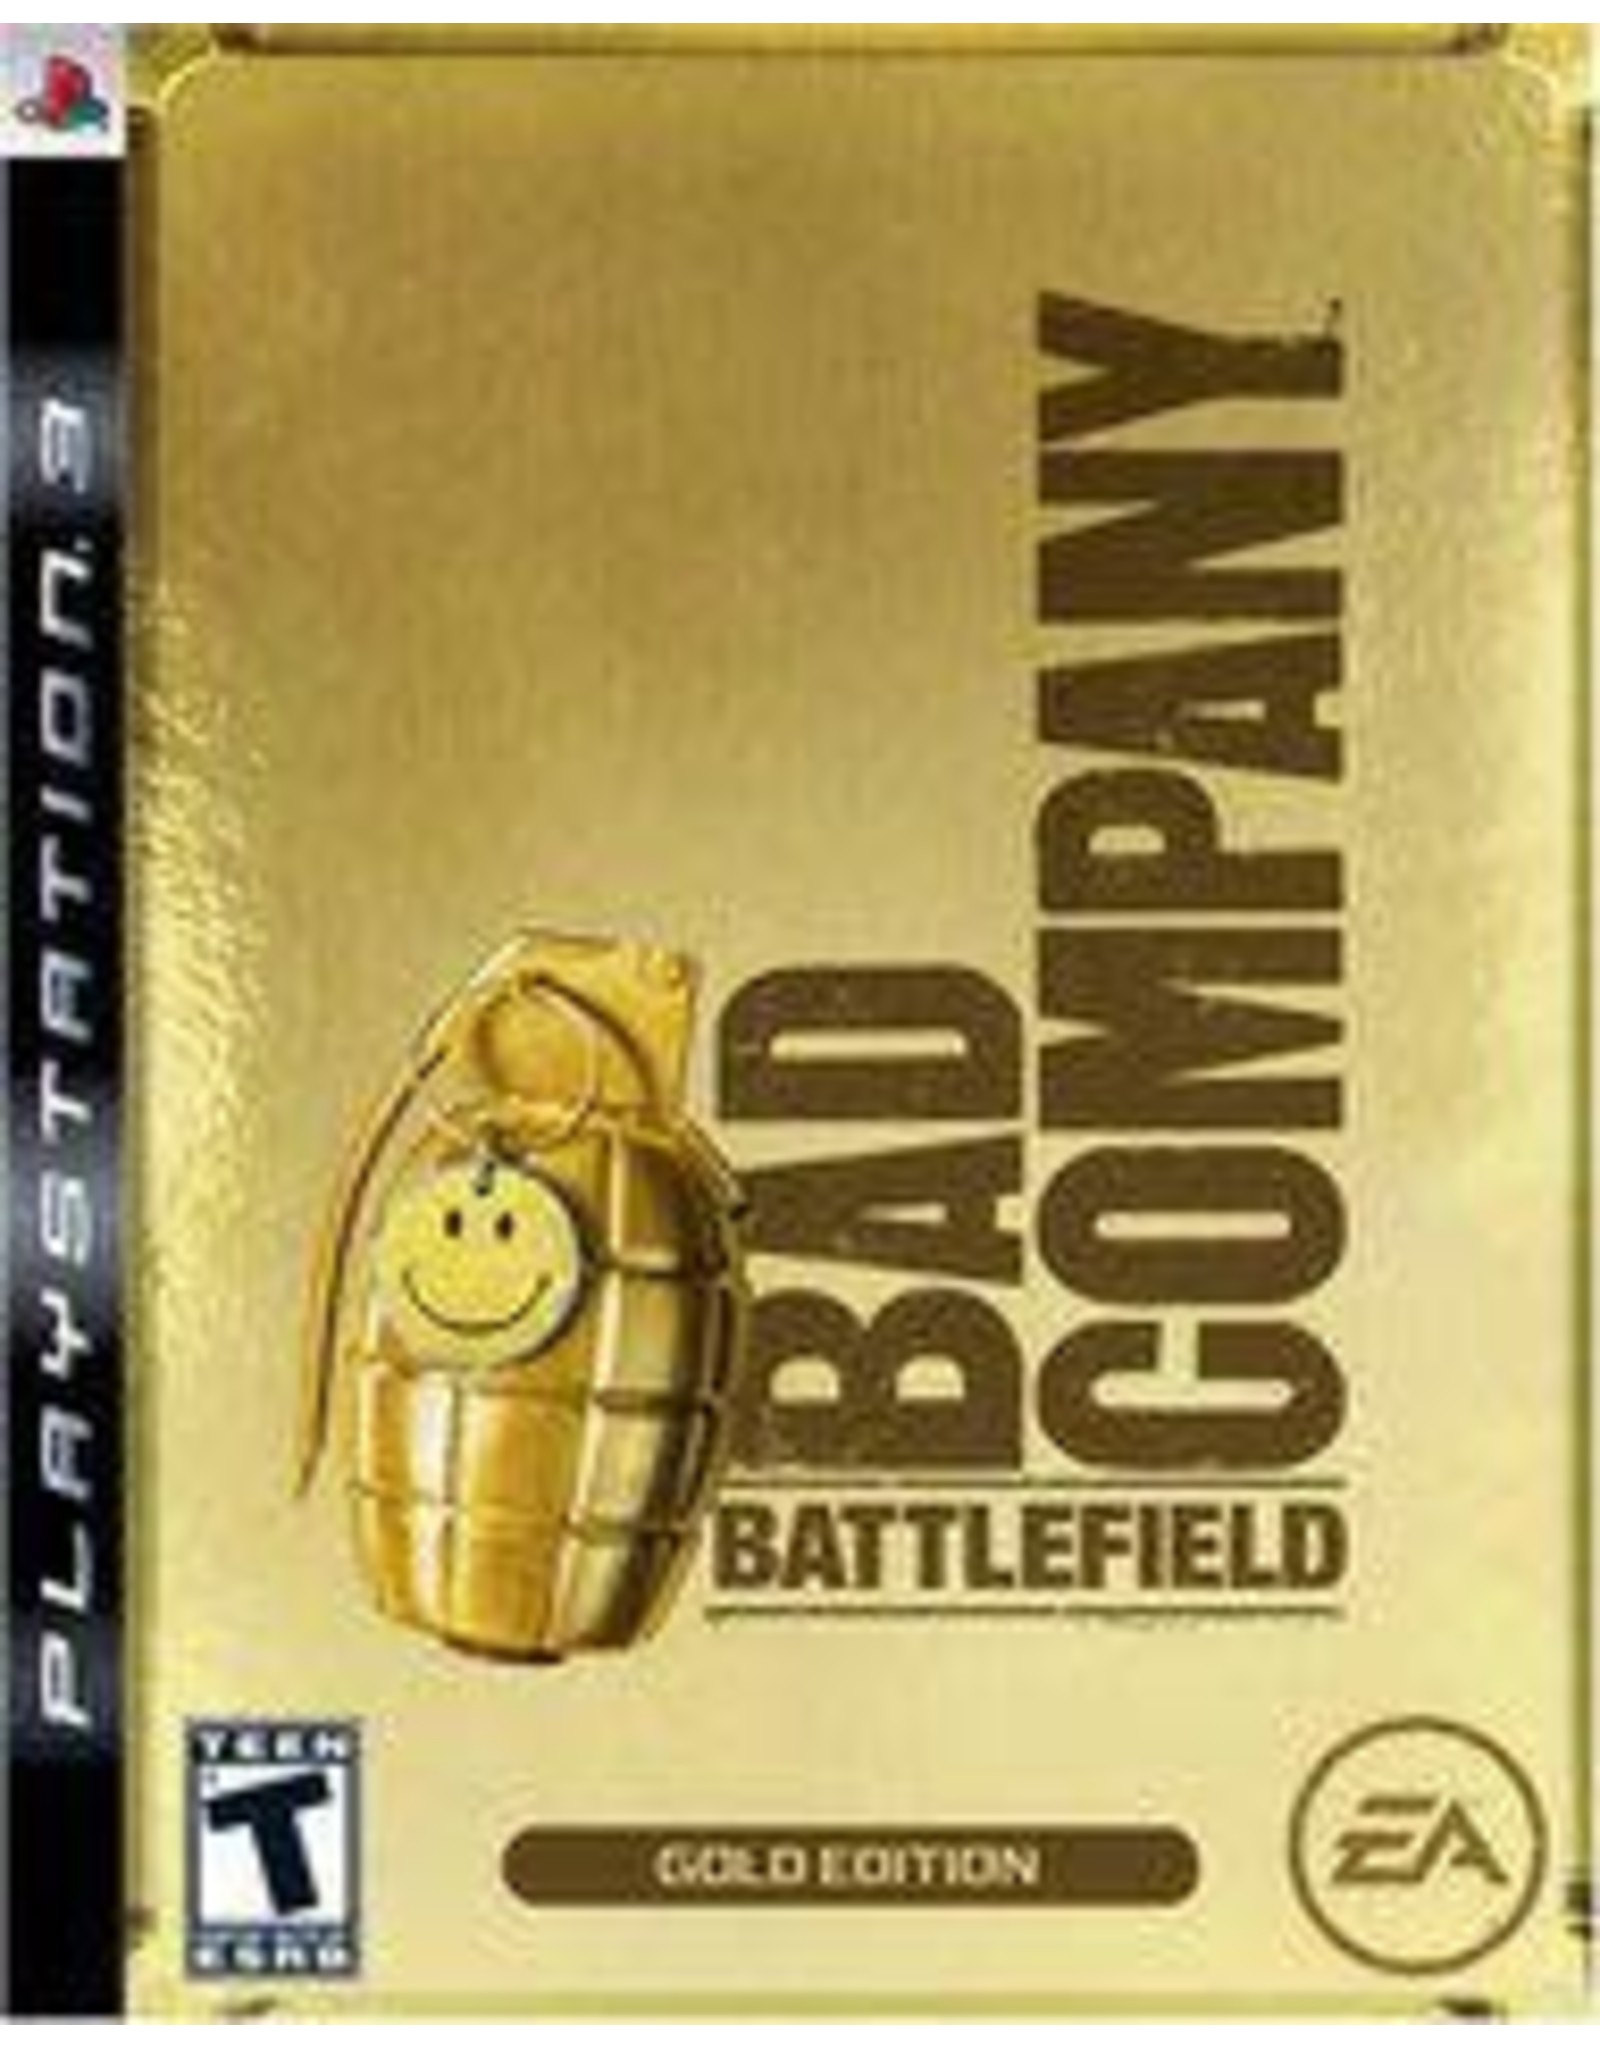 Playstation 3 Battlefield Bad Company Gold Edition (CiB)